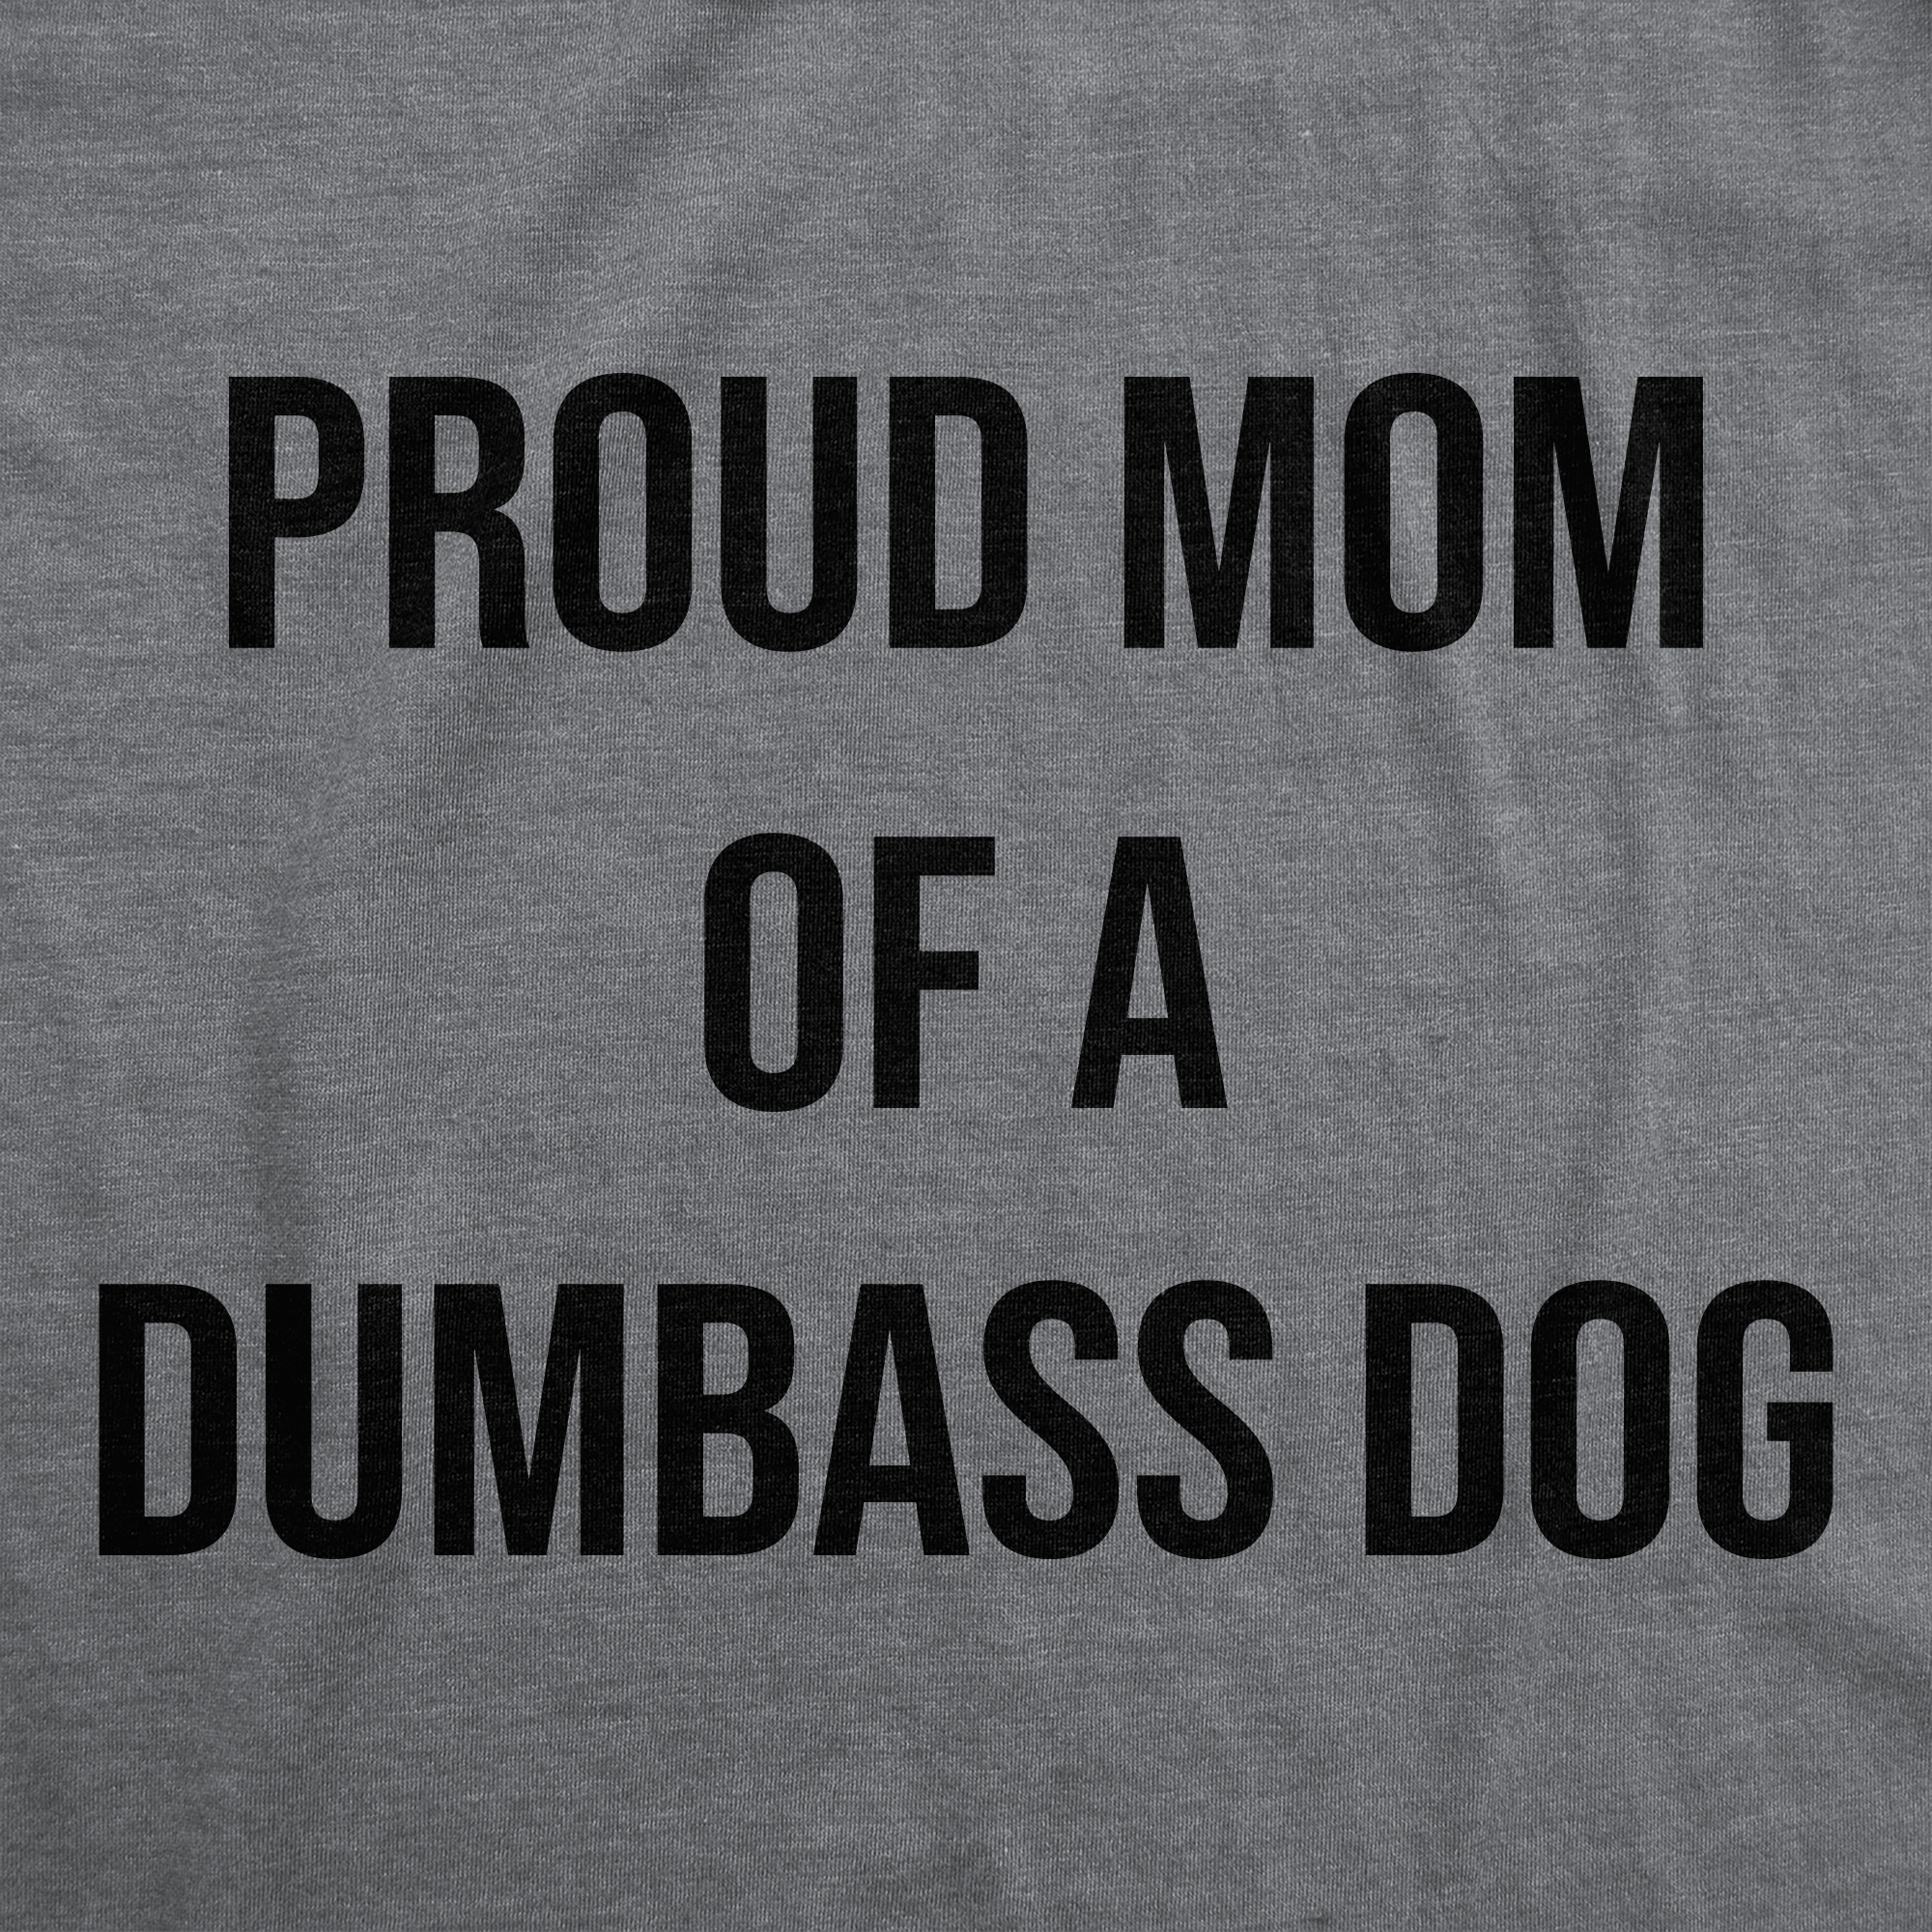 Funny Dark Heather Grey - Proud Mom Dog Proud Mom Of A Dumbass Dog Womens T Shirt Nerdy Dog Tee